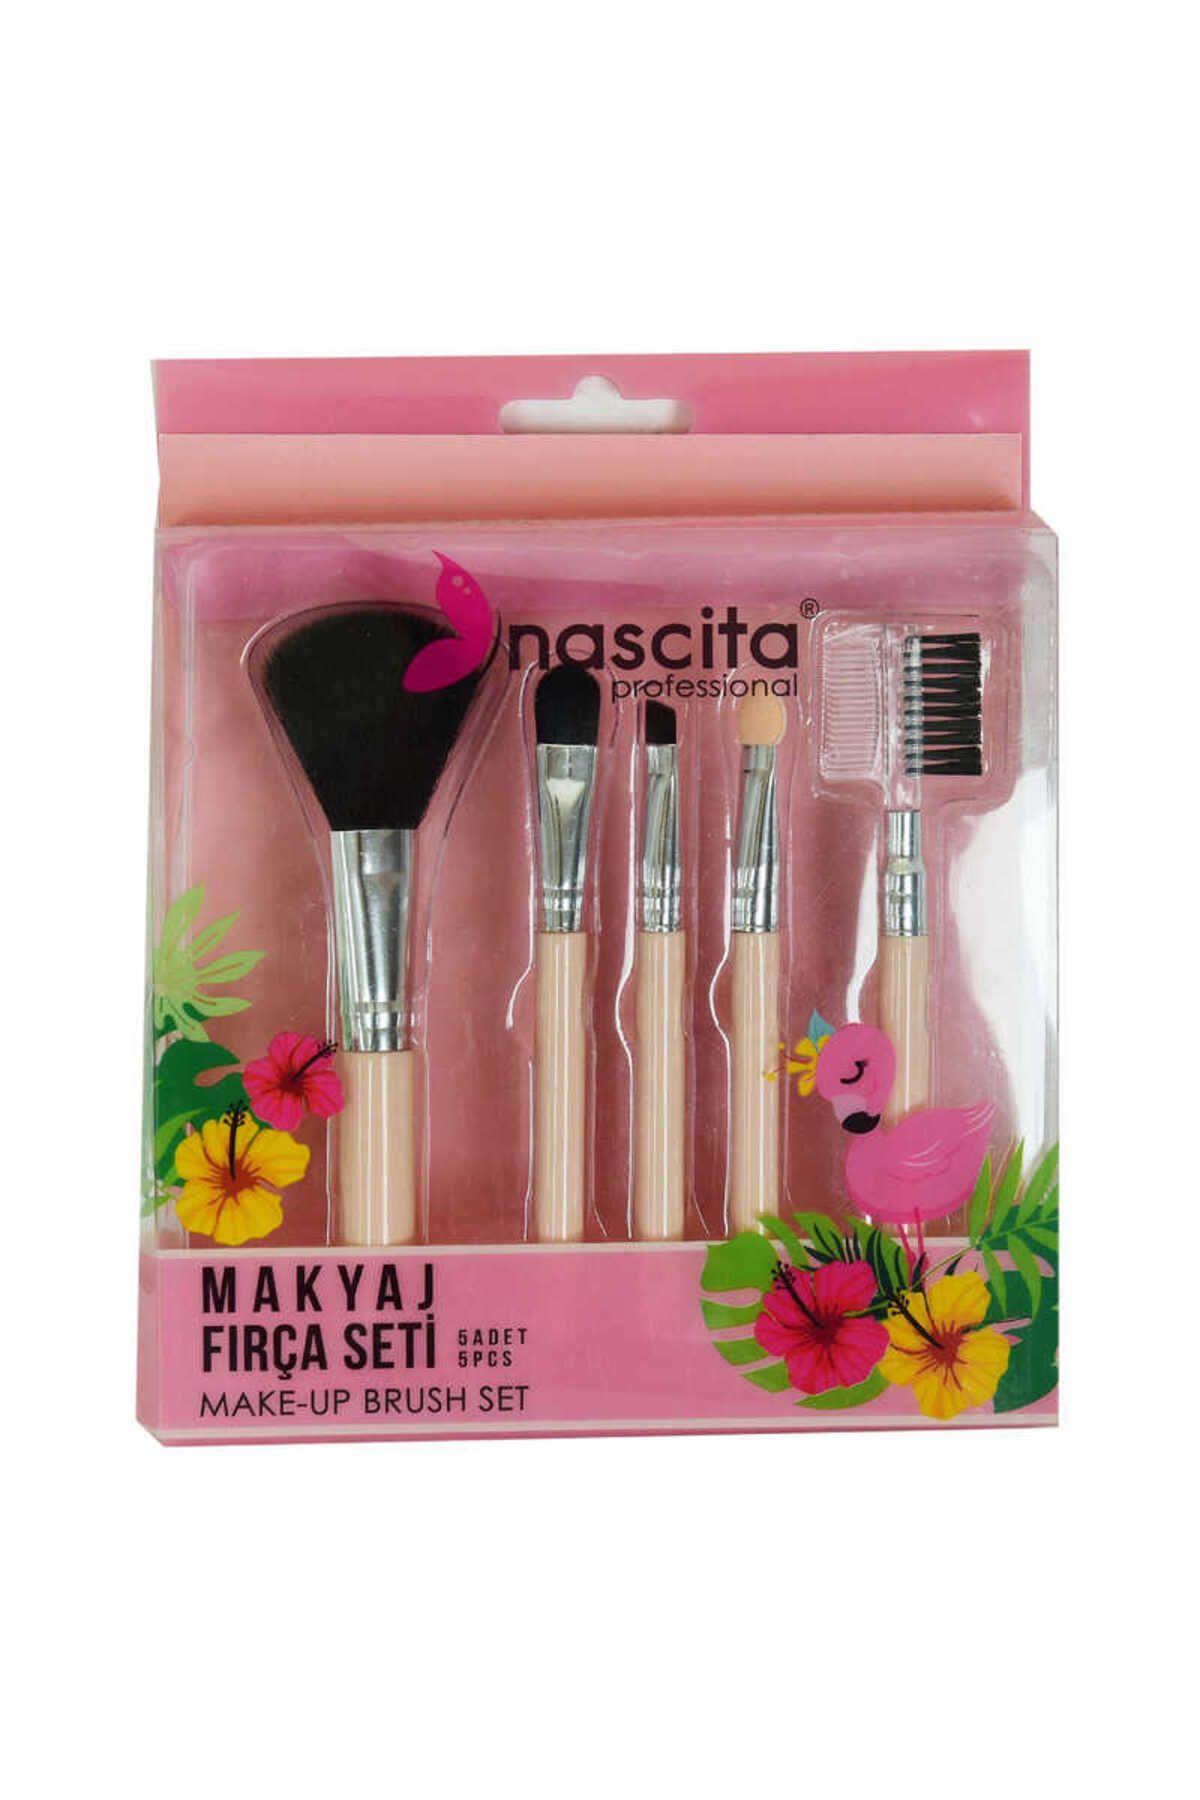 Nascita CLZ214 Makyaj Fırça Seti 5 Li Make-Up Brush Set Professional